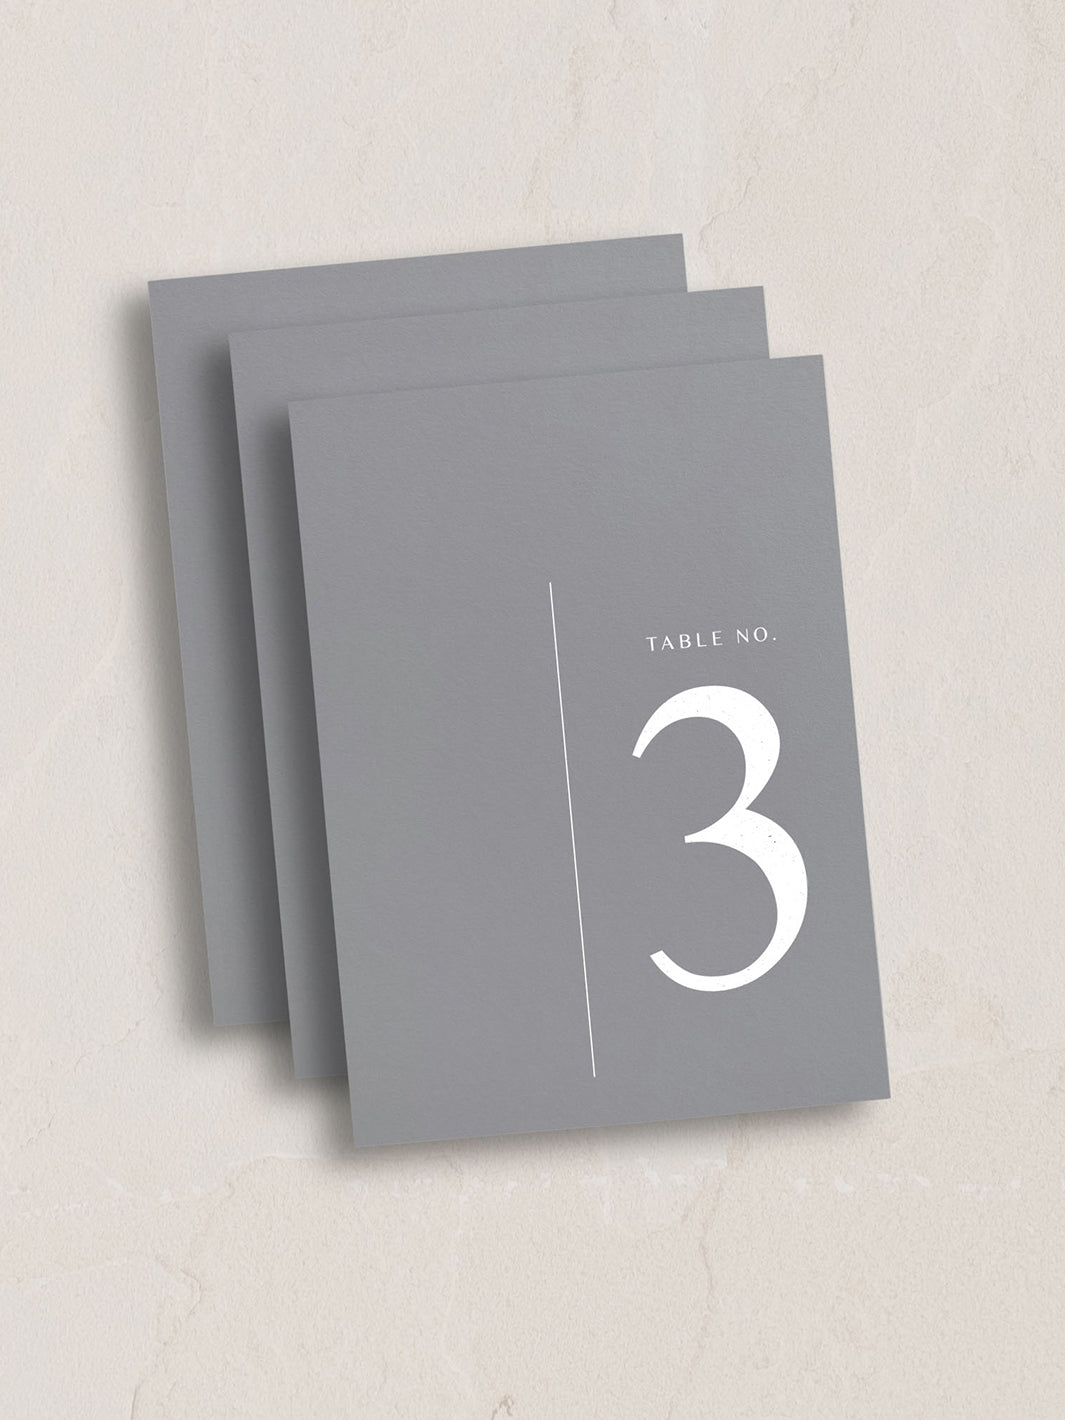 Casey Semi-Custom Table Numbers from Leighwood Design Studio